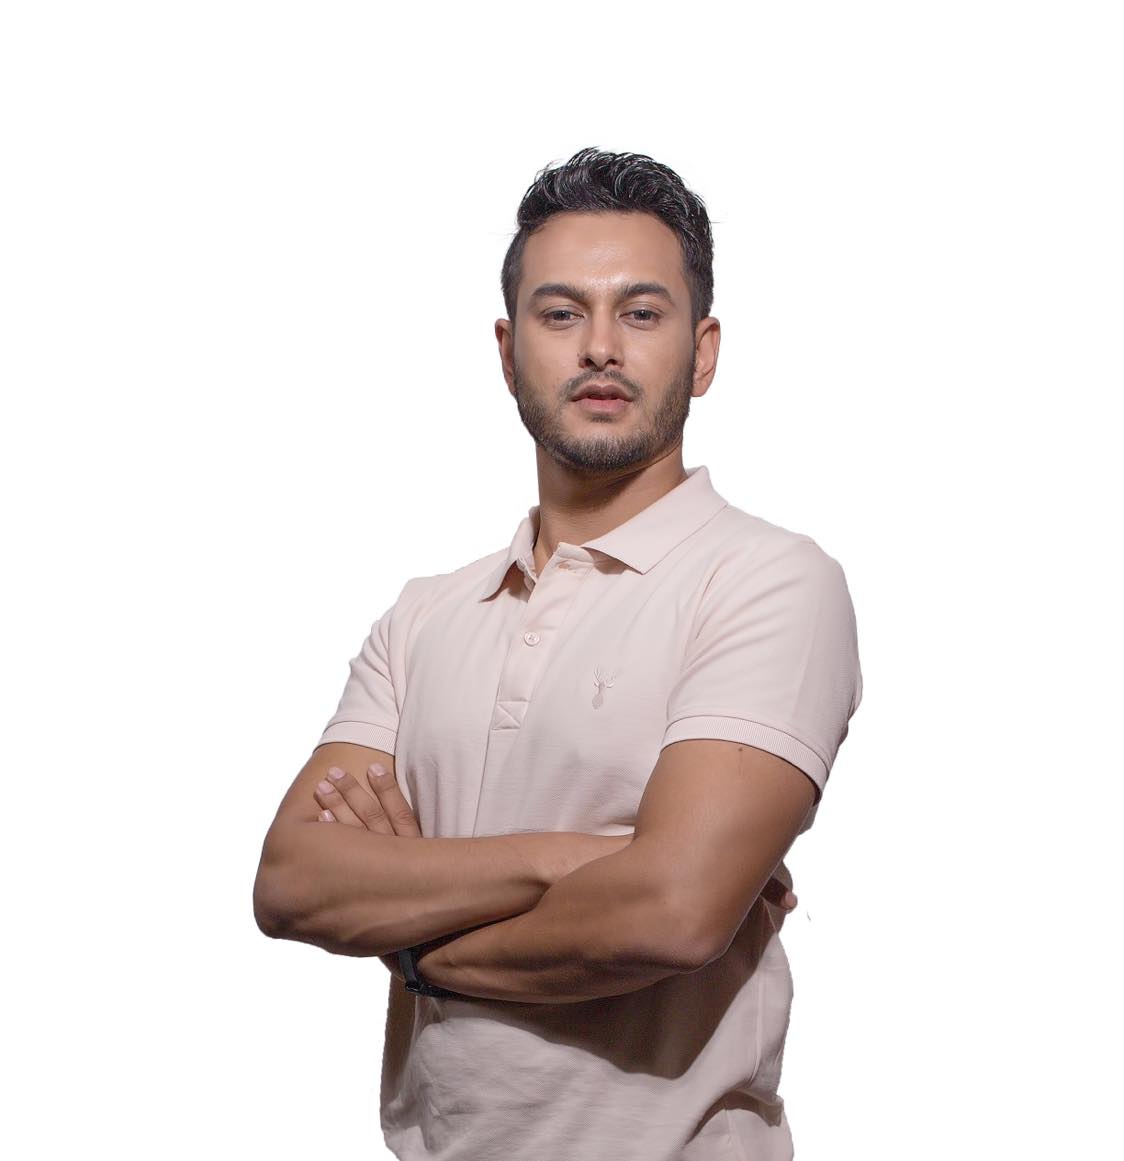 Vivo designed to complement lifestyles of young: Brand ambassador Pradeep Khadka